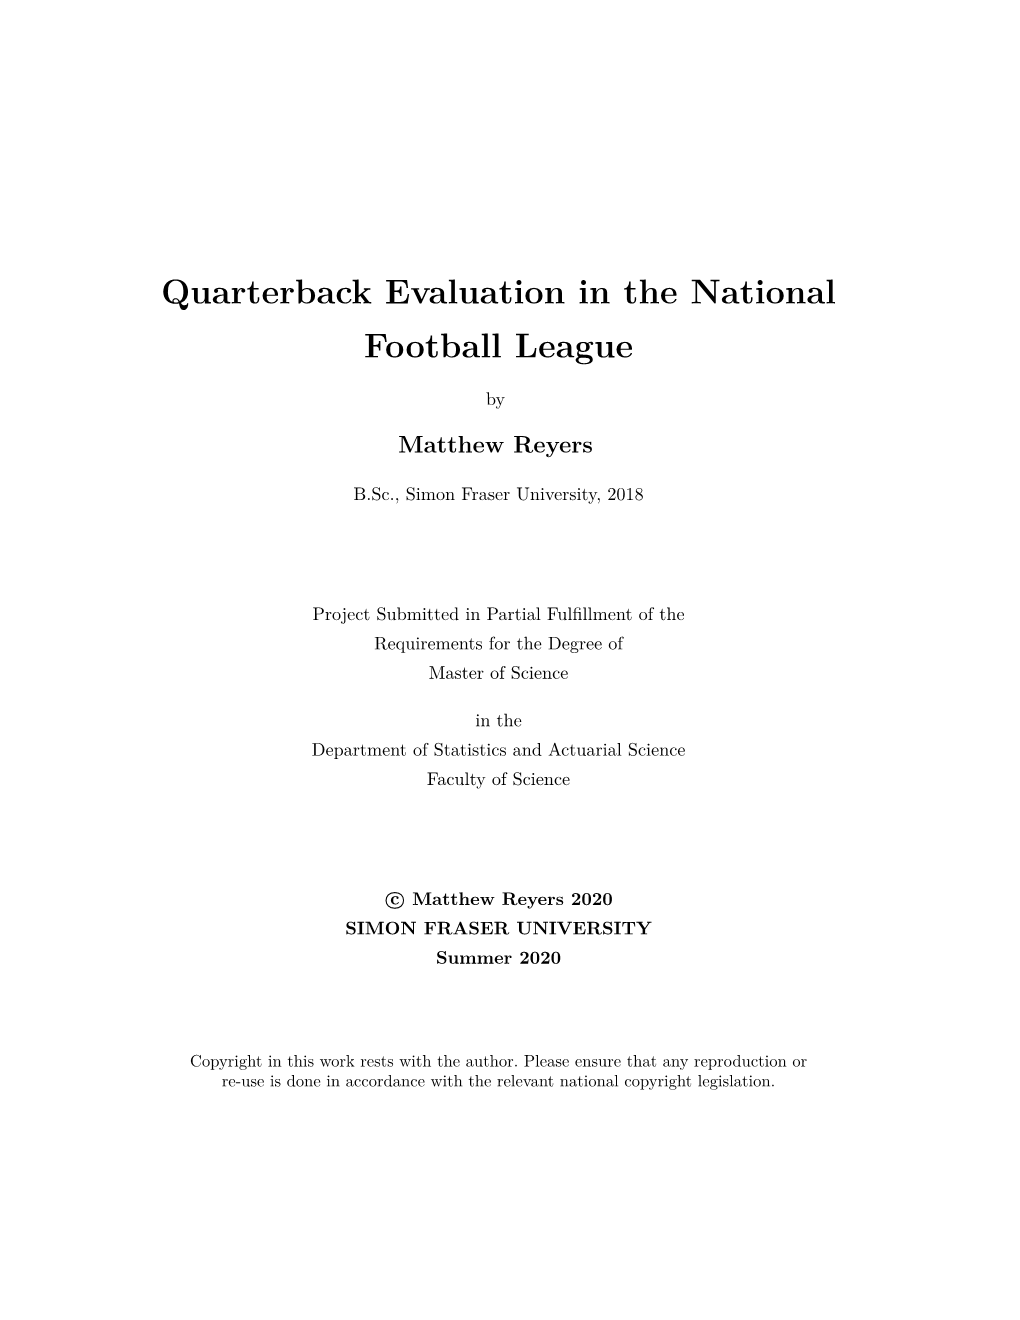 Quarterback Evaluation in the National Football League